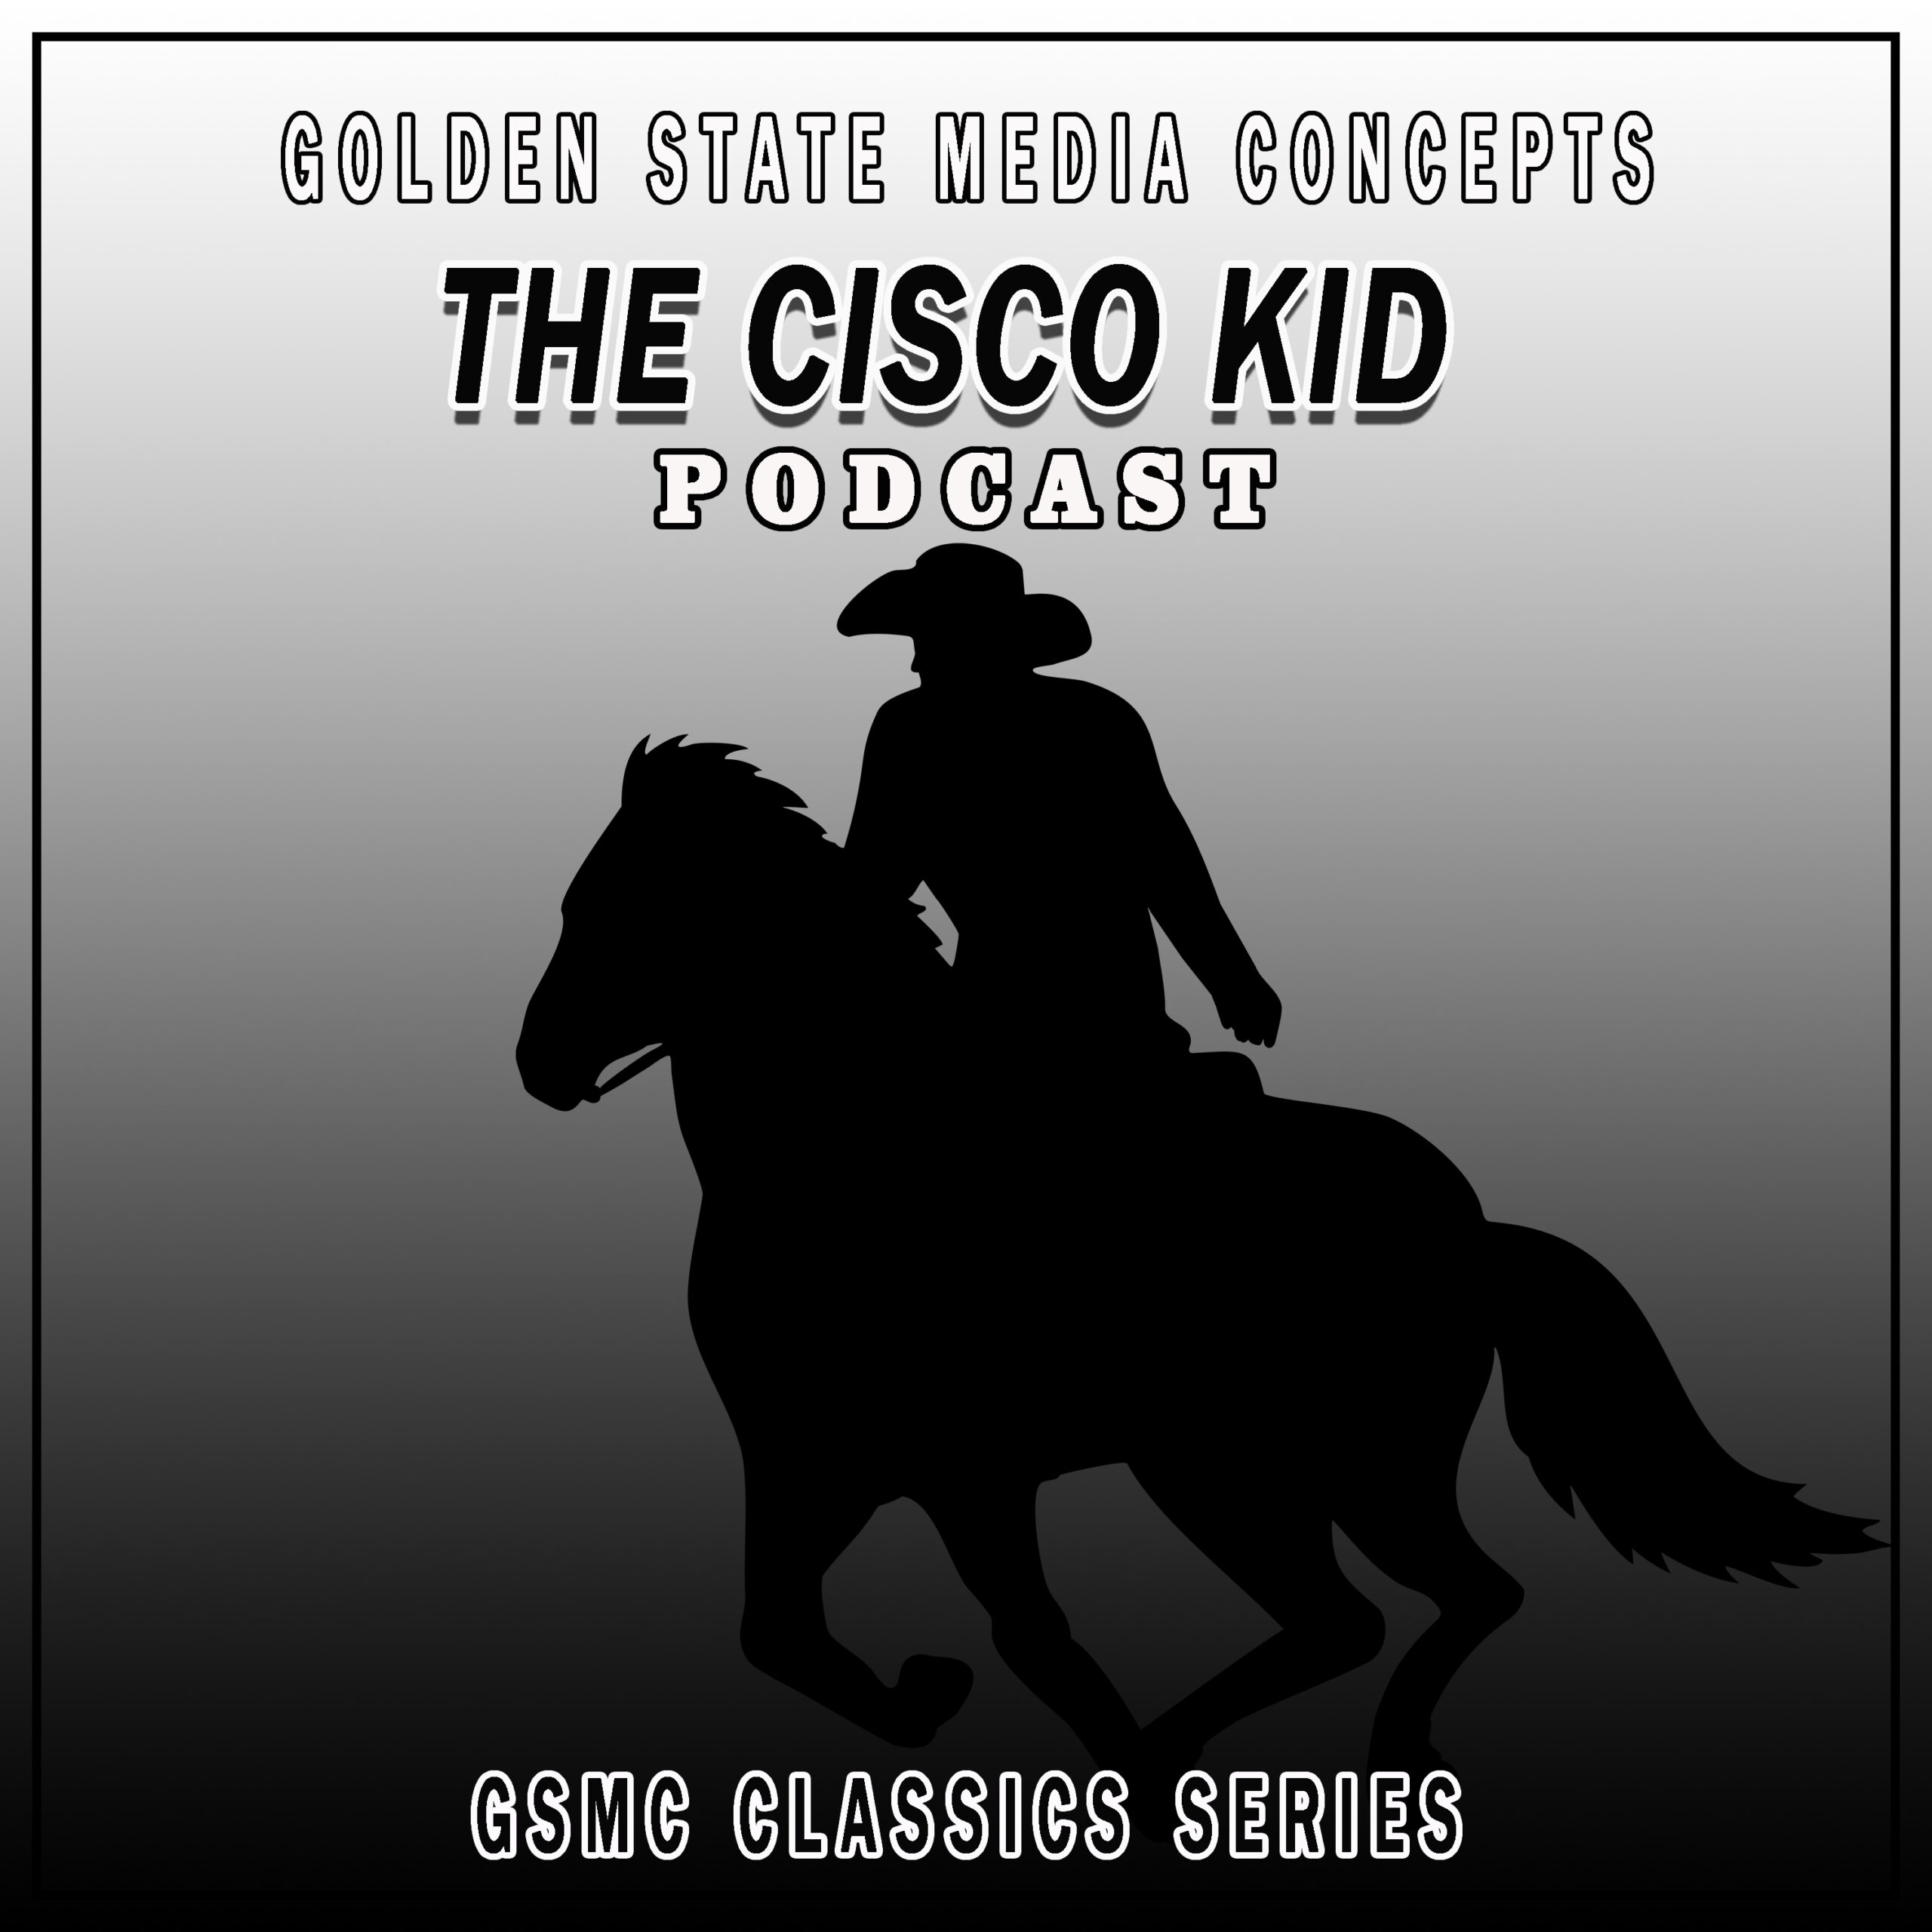 GSMC Classics: The Cisco Kid